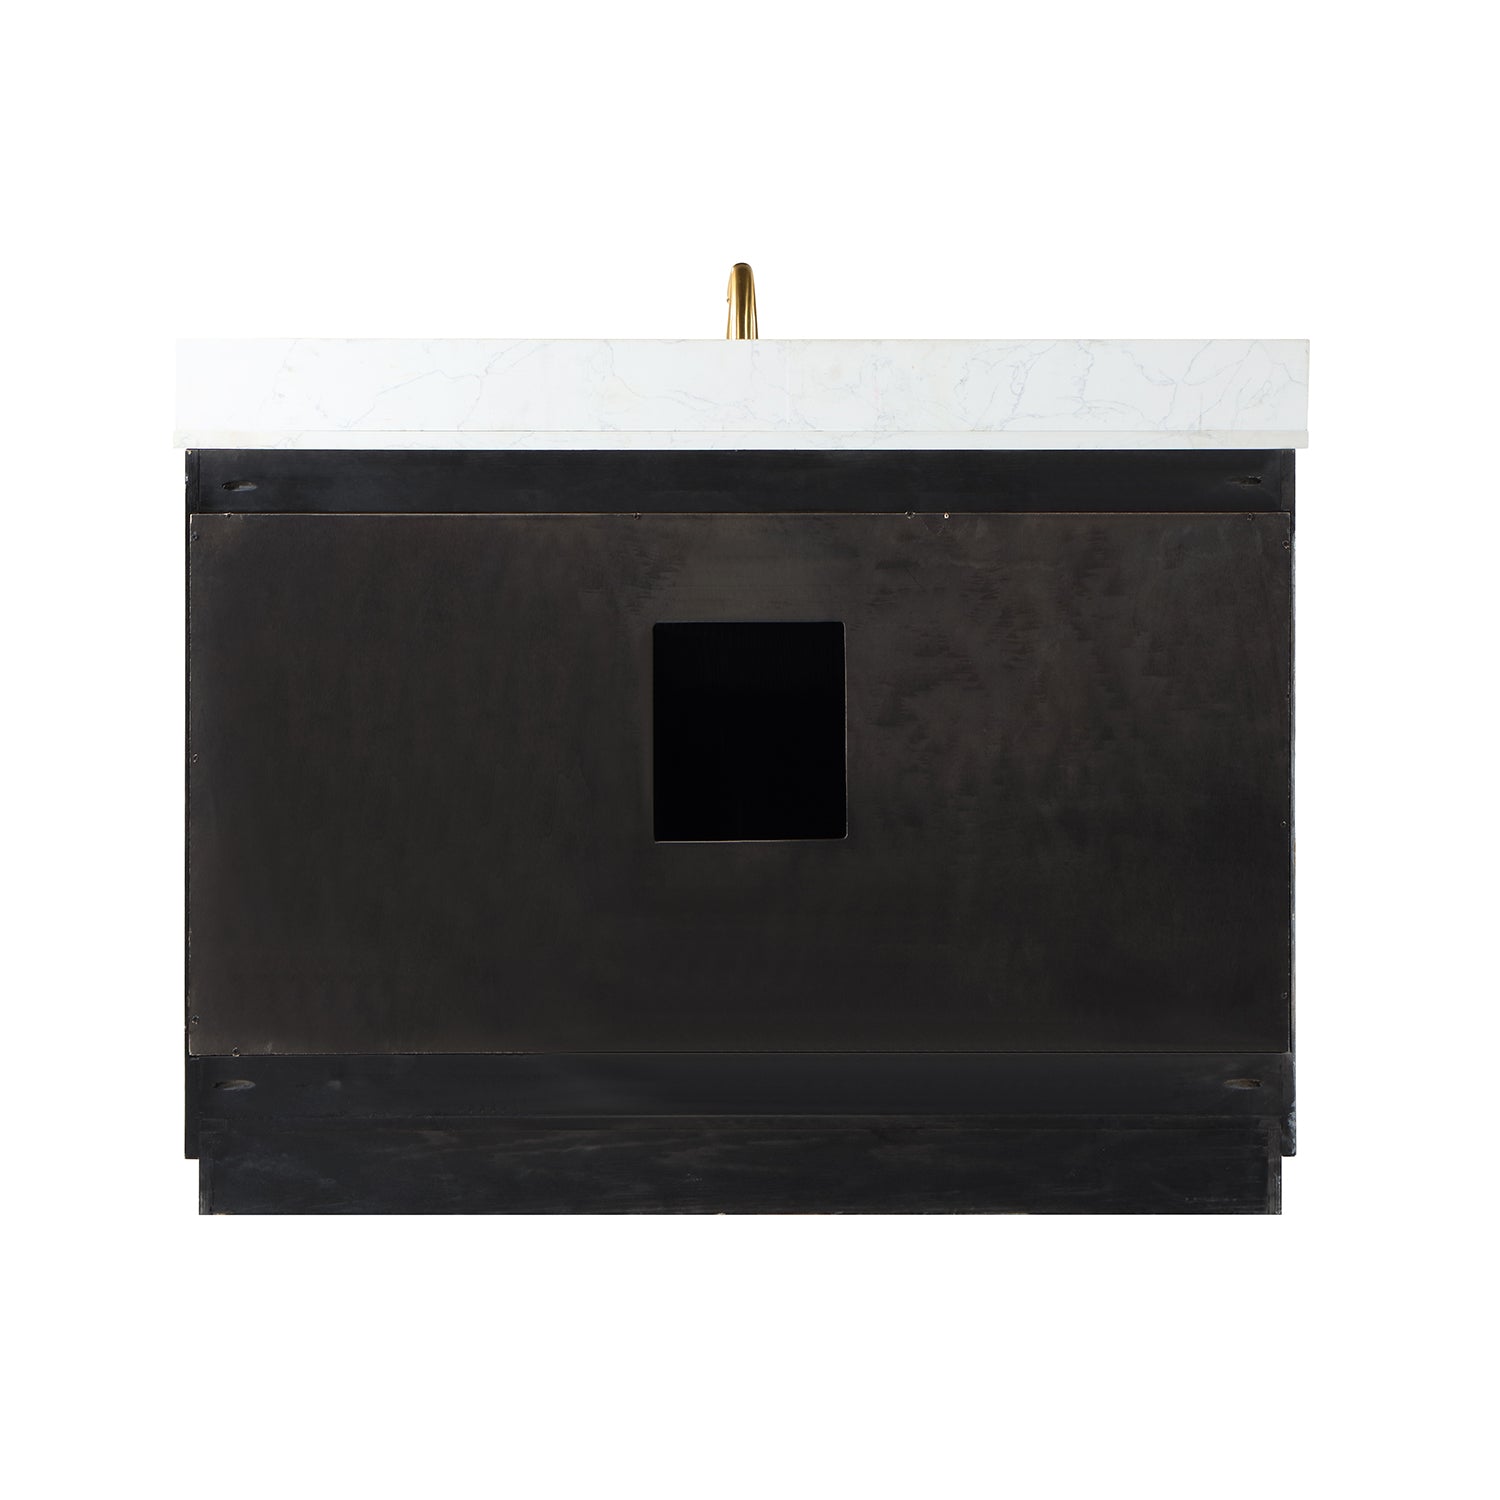 Gazsi 48" Single Bathroom Vanity Set with Grain White Composite Stone Countertop